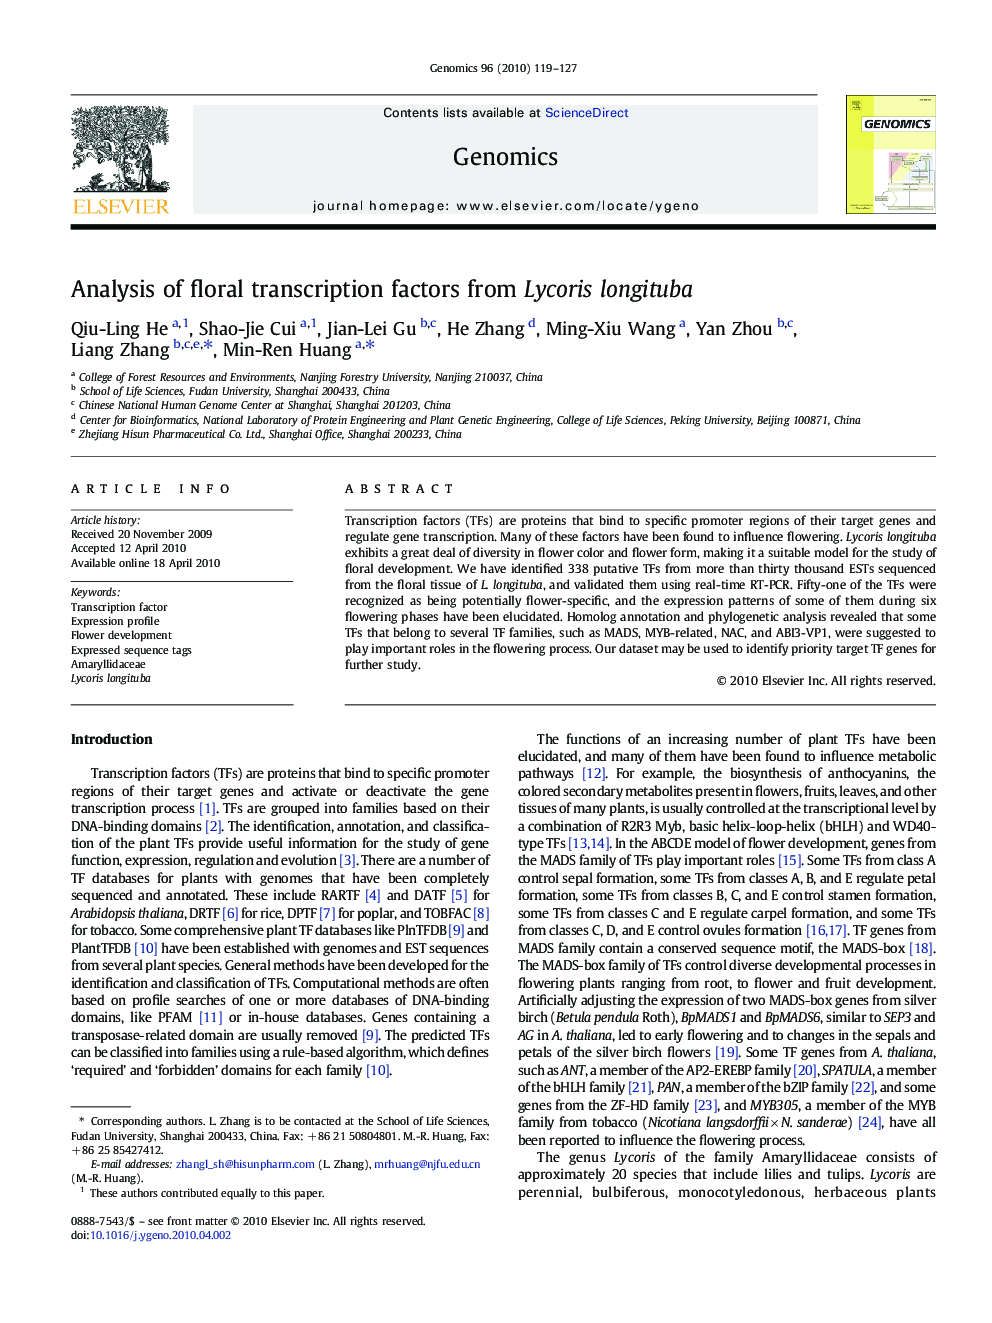 Analysis of floral transcription factors from Lycoris longituba